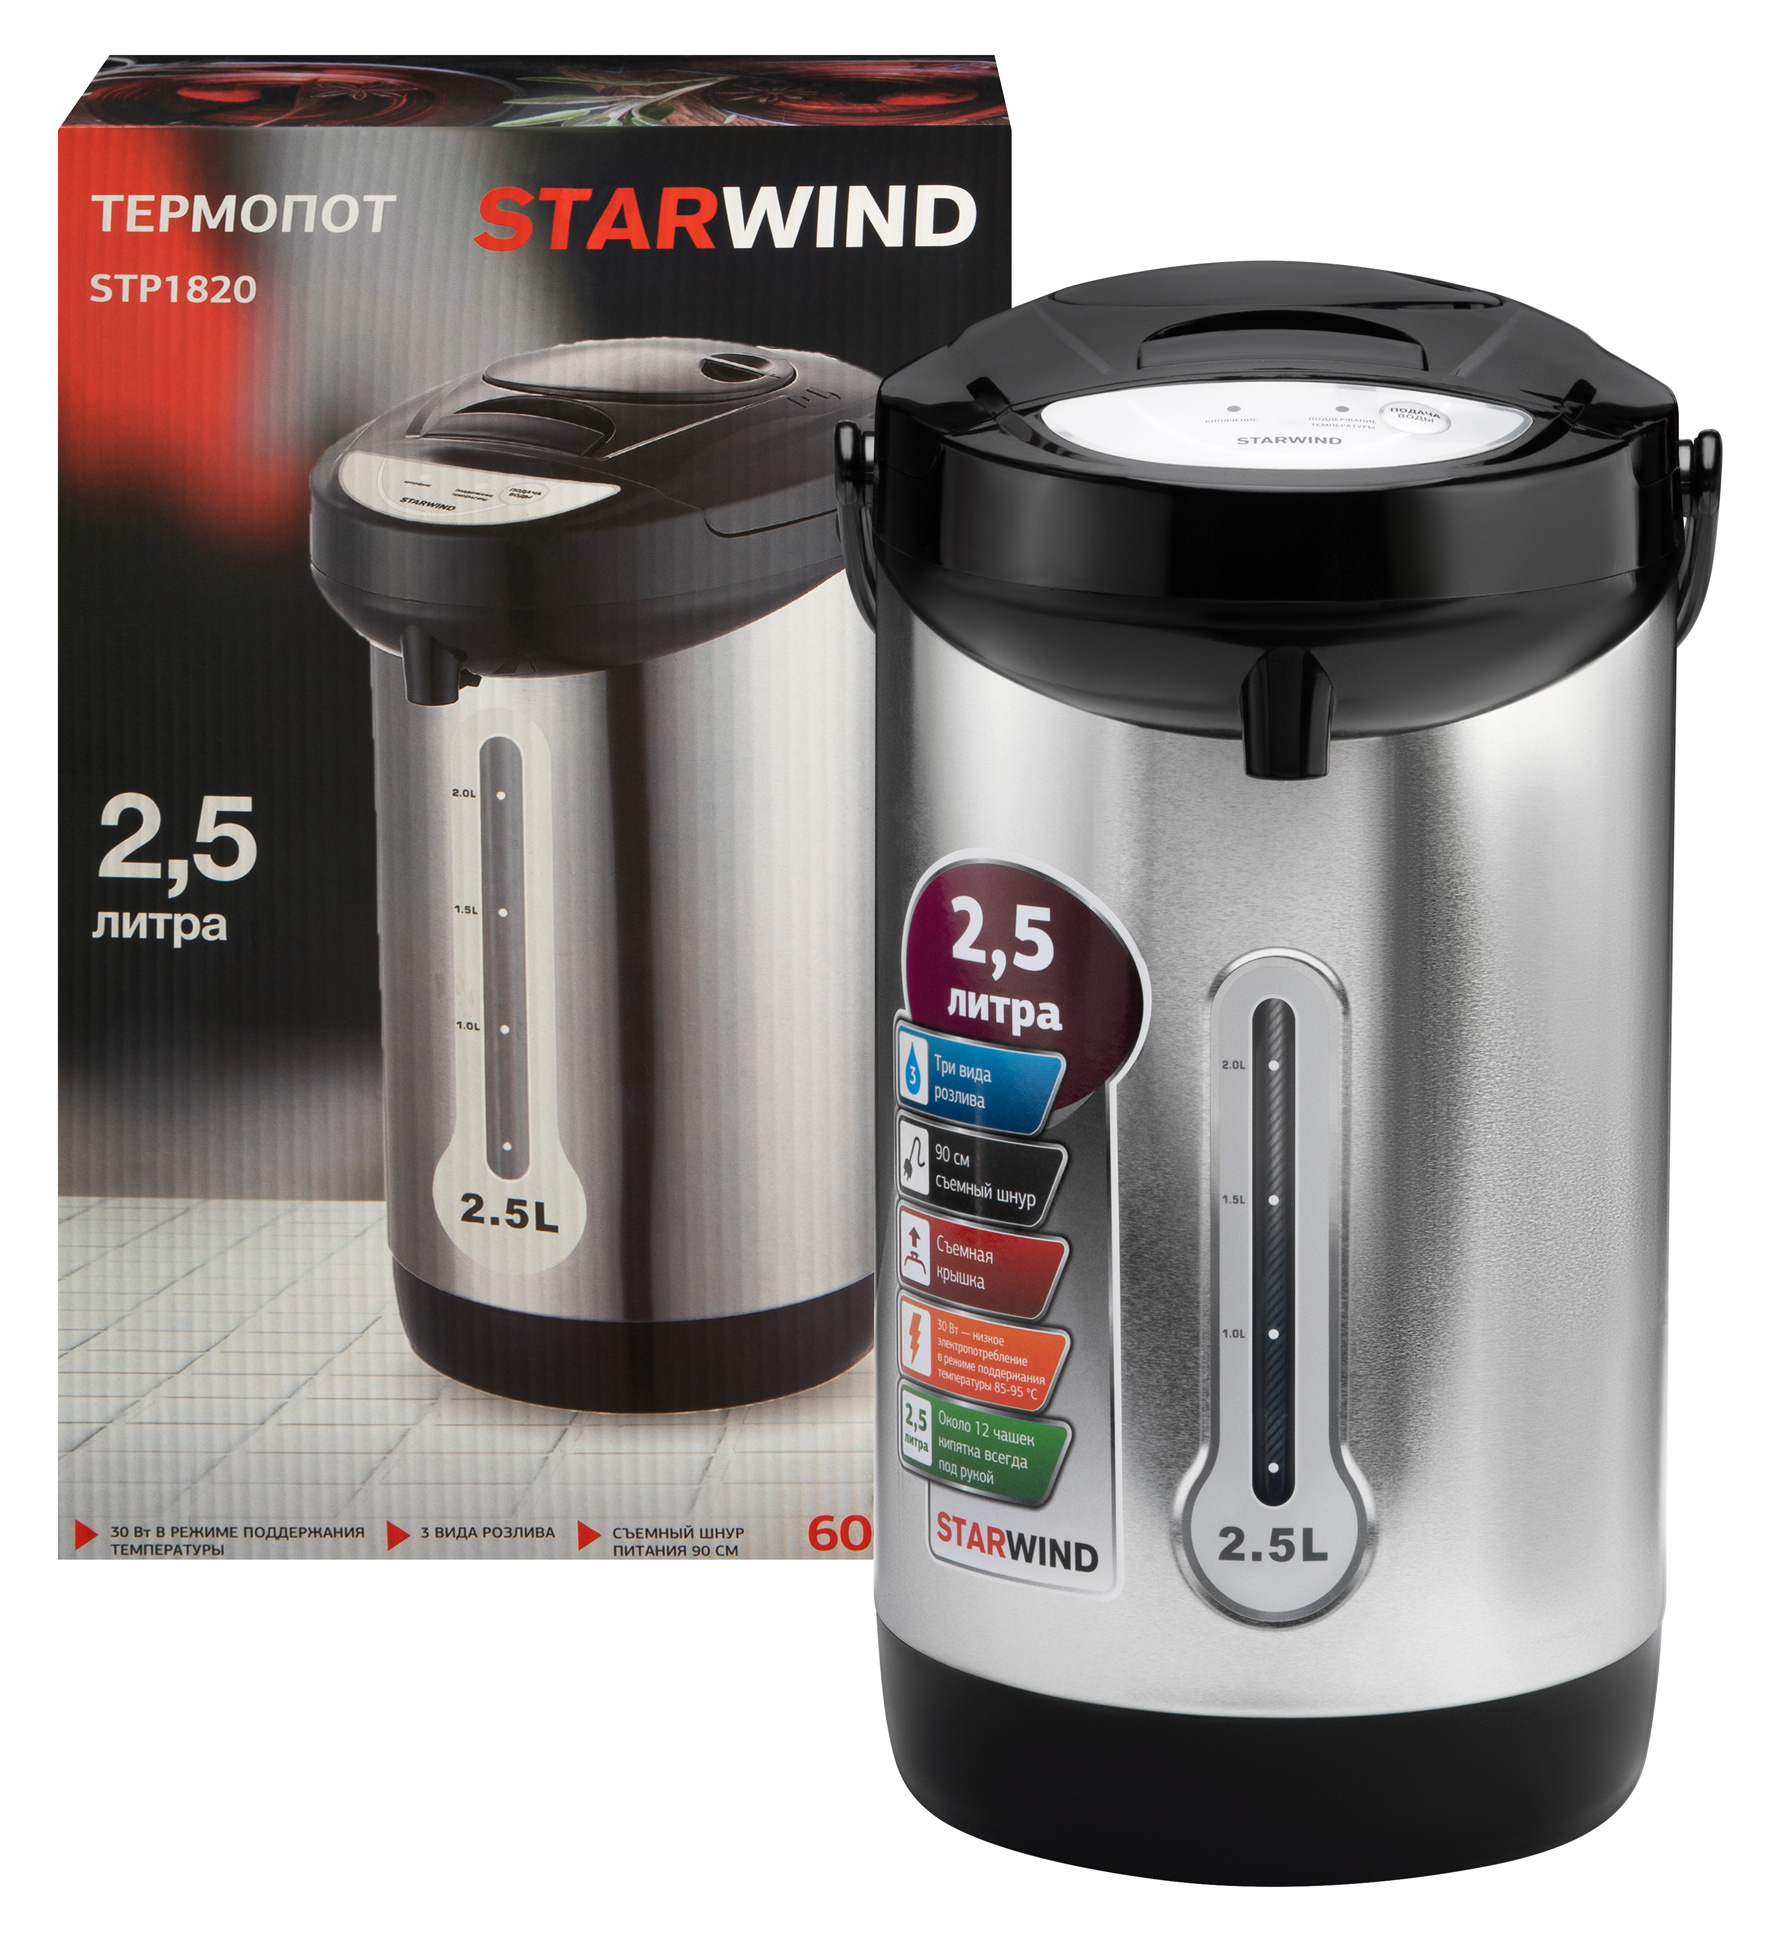 Термопот Starwind STP1820 серебристый/черный от магазина Старвинд